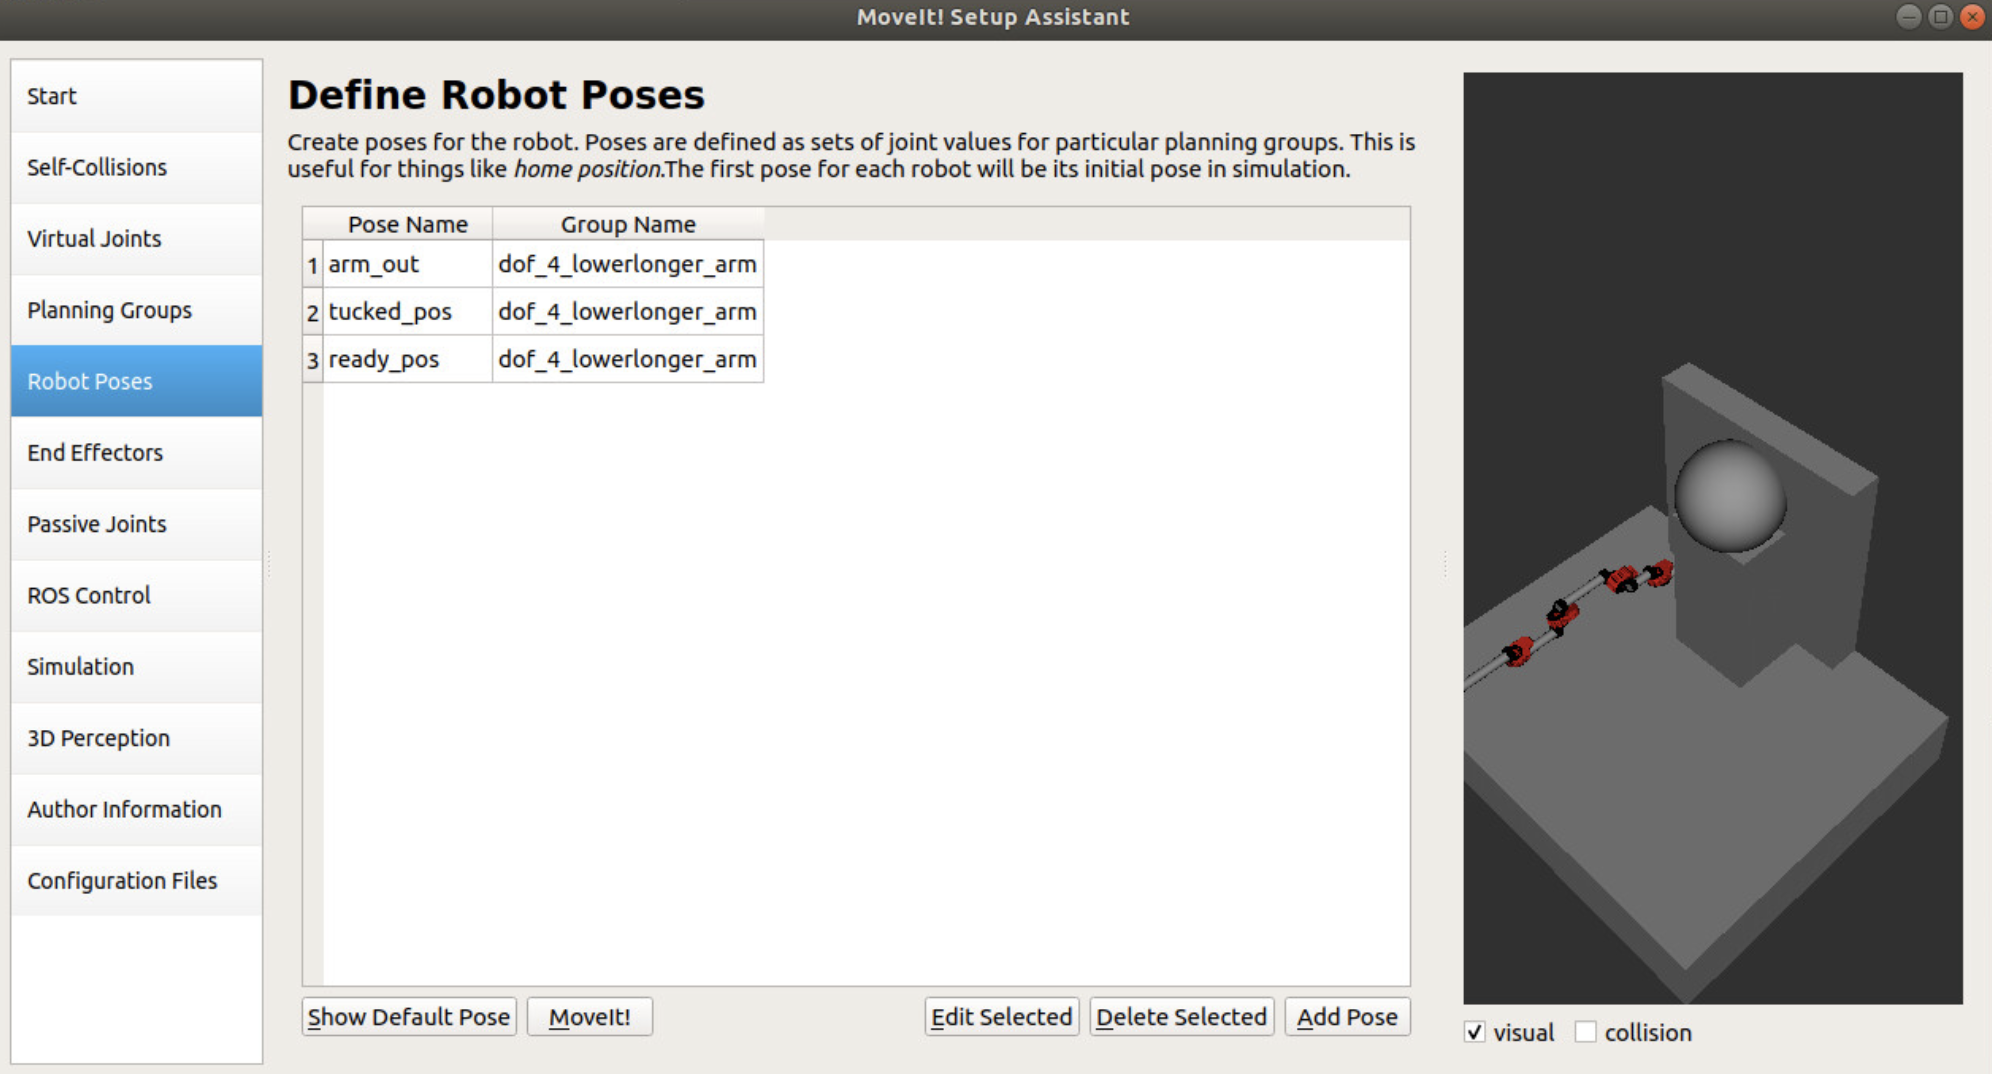 moveit_setup_assistant_robot_poses